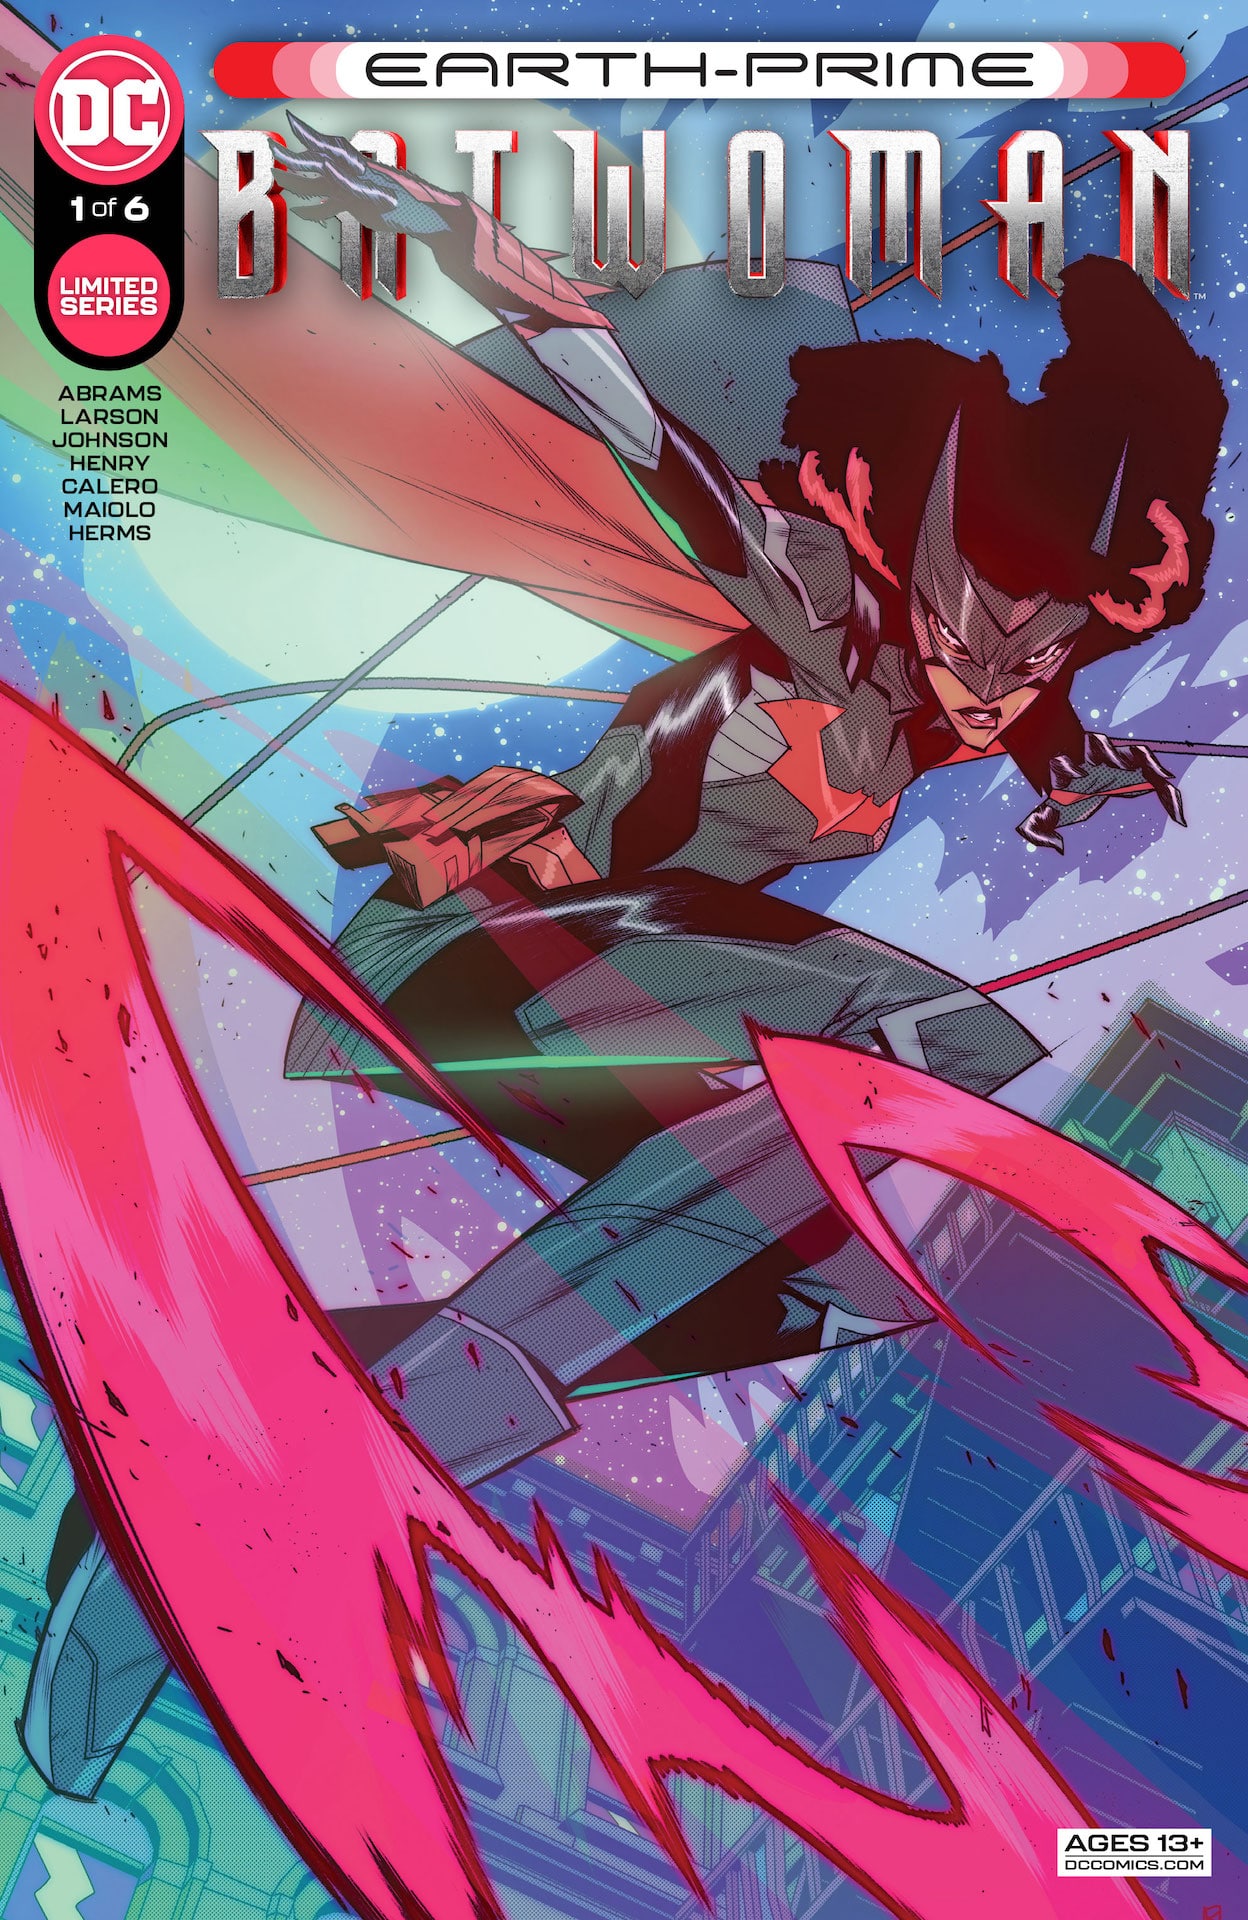 DC Preview: Earth-Prime #1: Batwoman